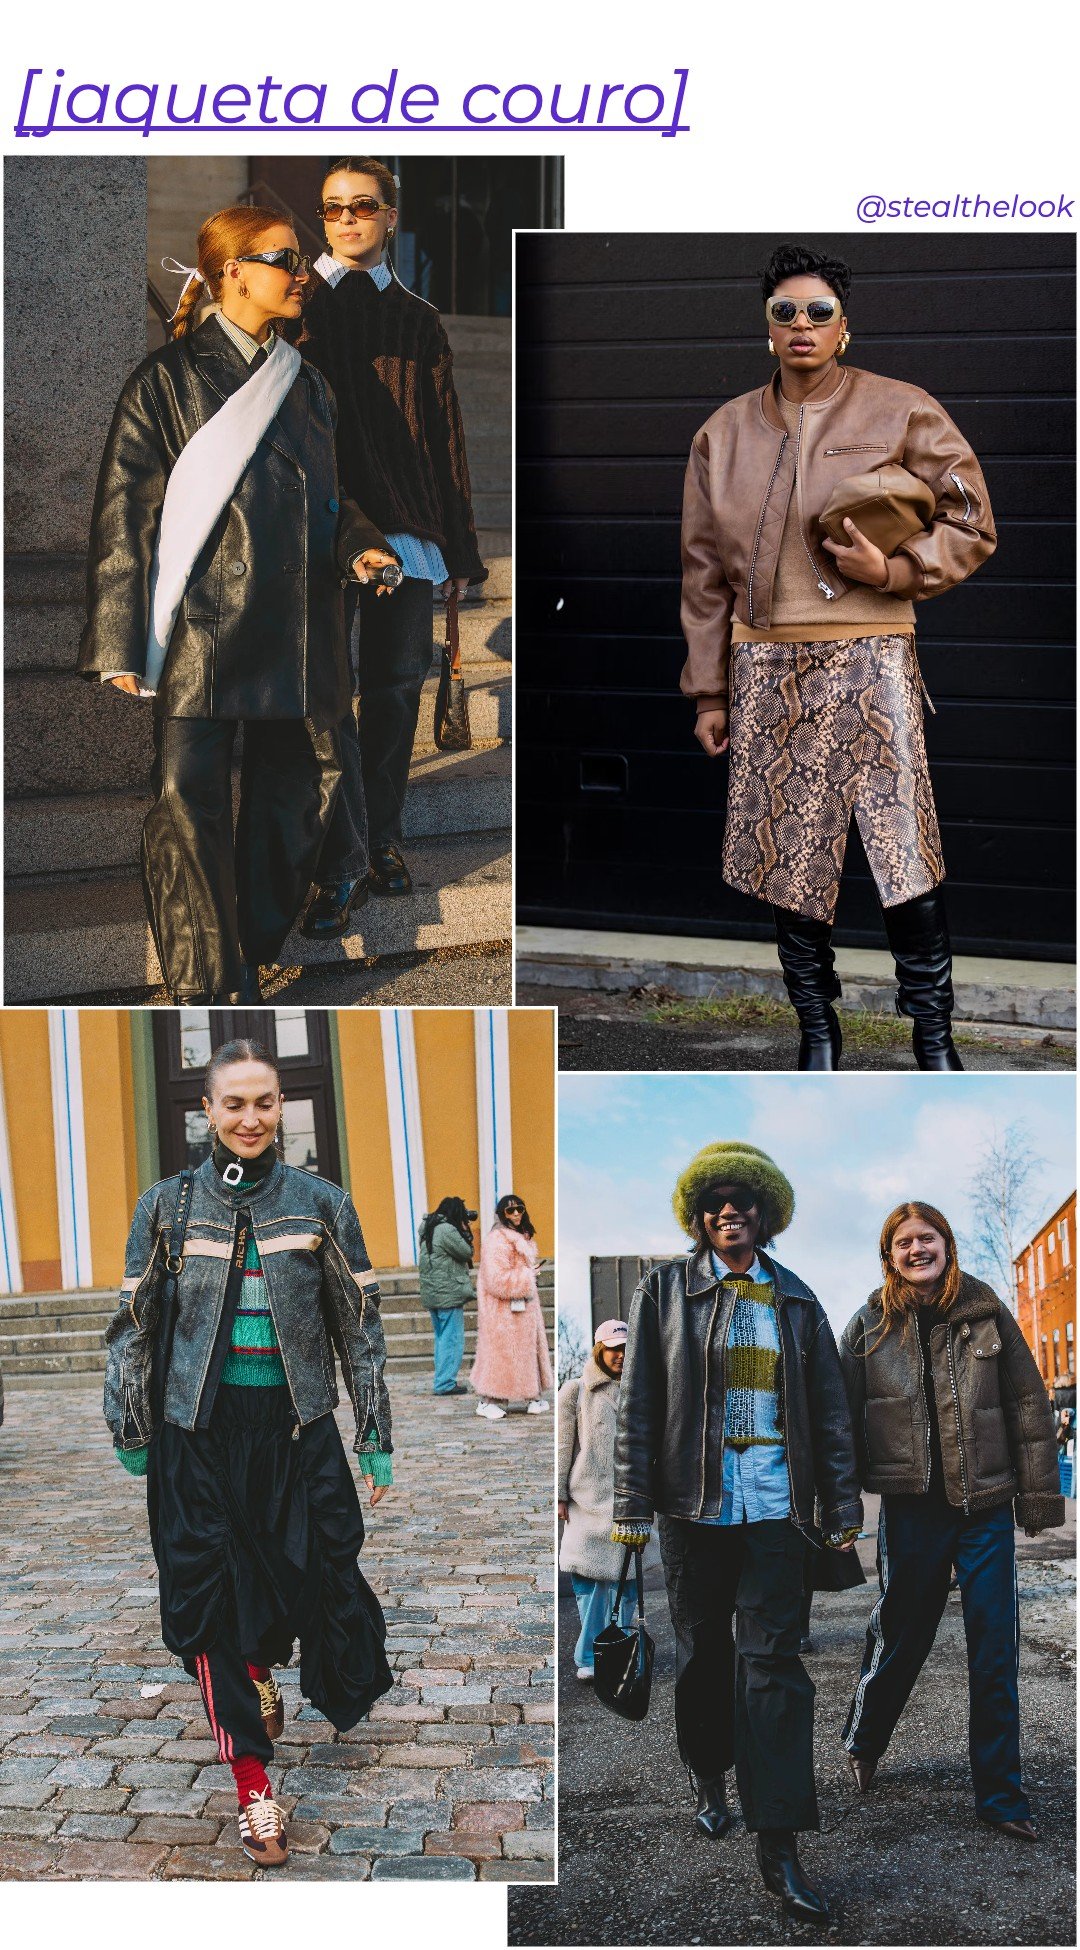 Tendências do street style - Tendências do street style - Tendências do street style - Inverno - Copenhagen Fashion Week - https://stealthelook.com.br